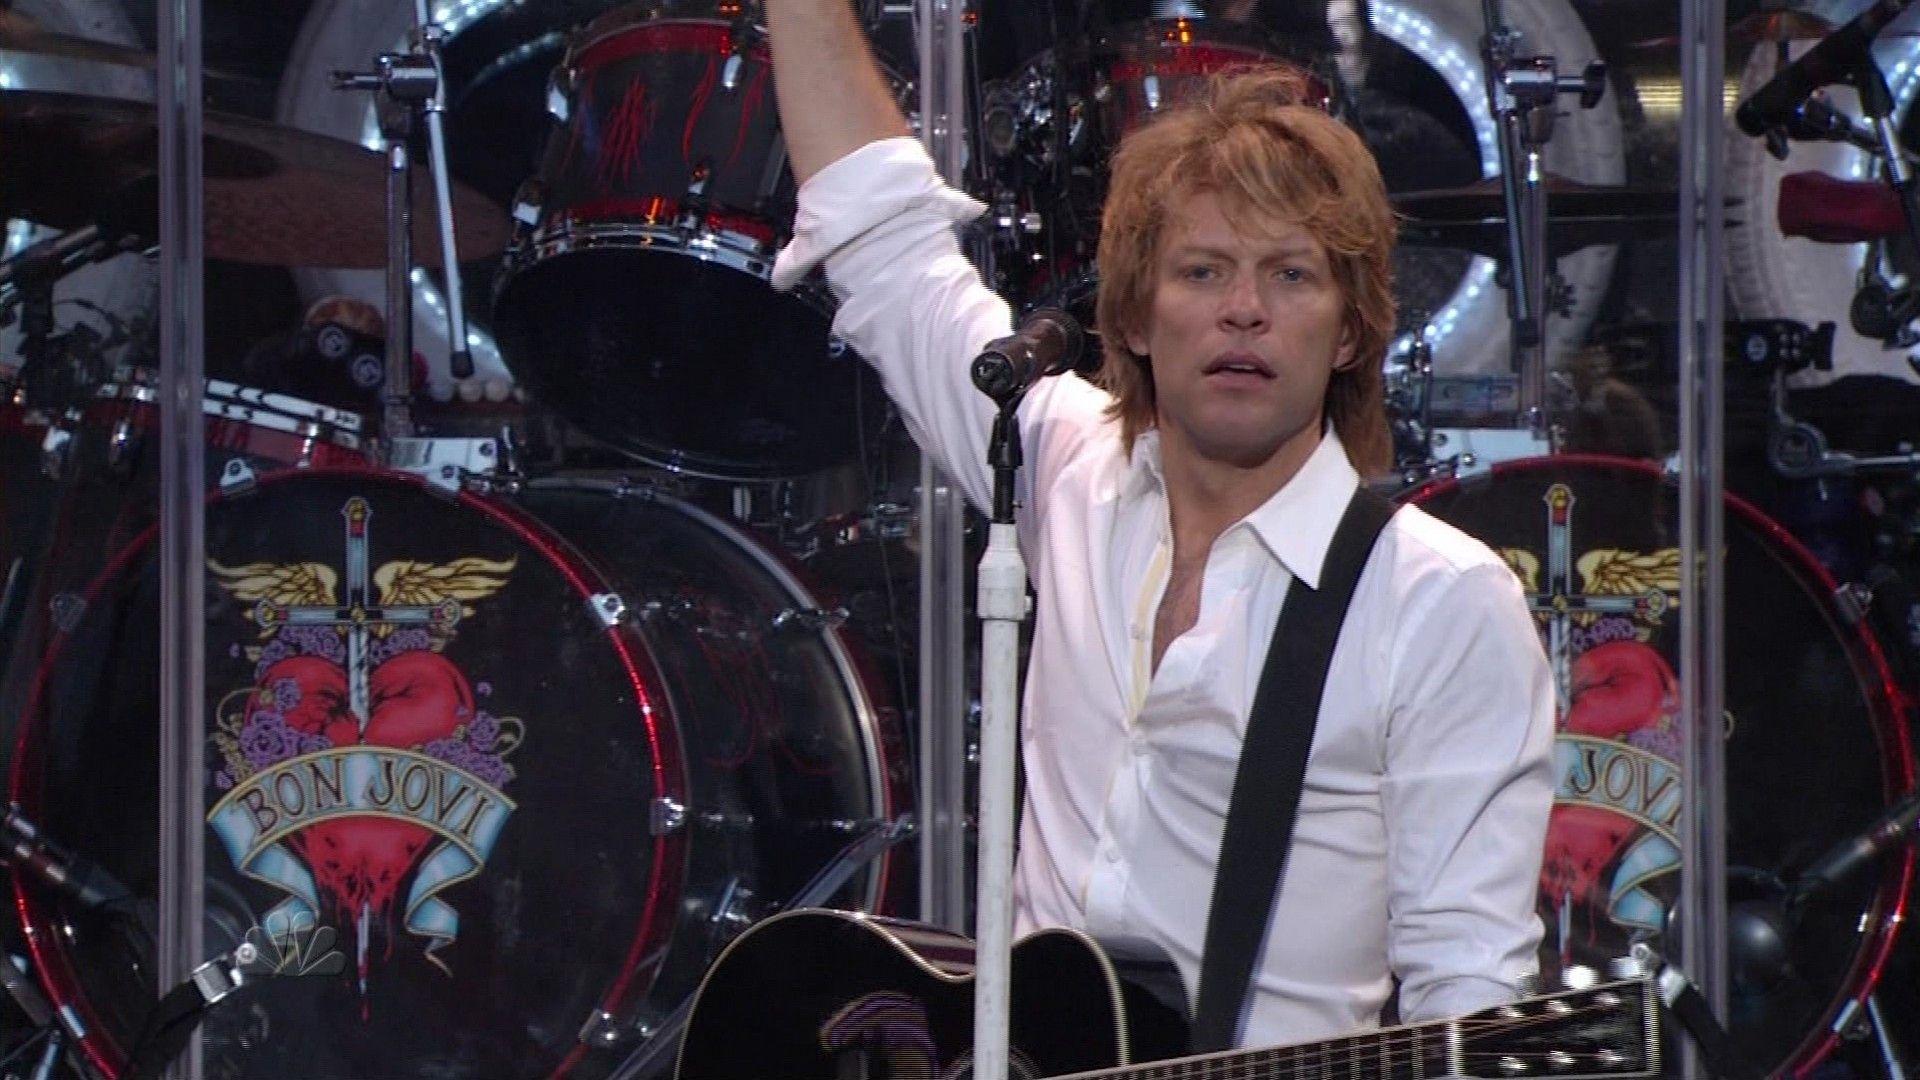 Bon Jovi Background Download Free